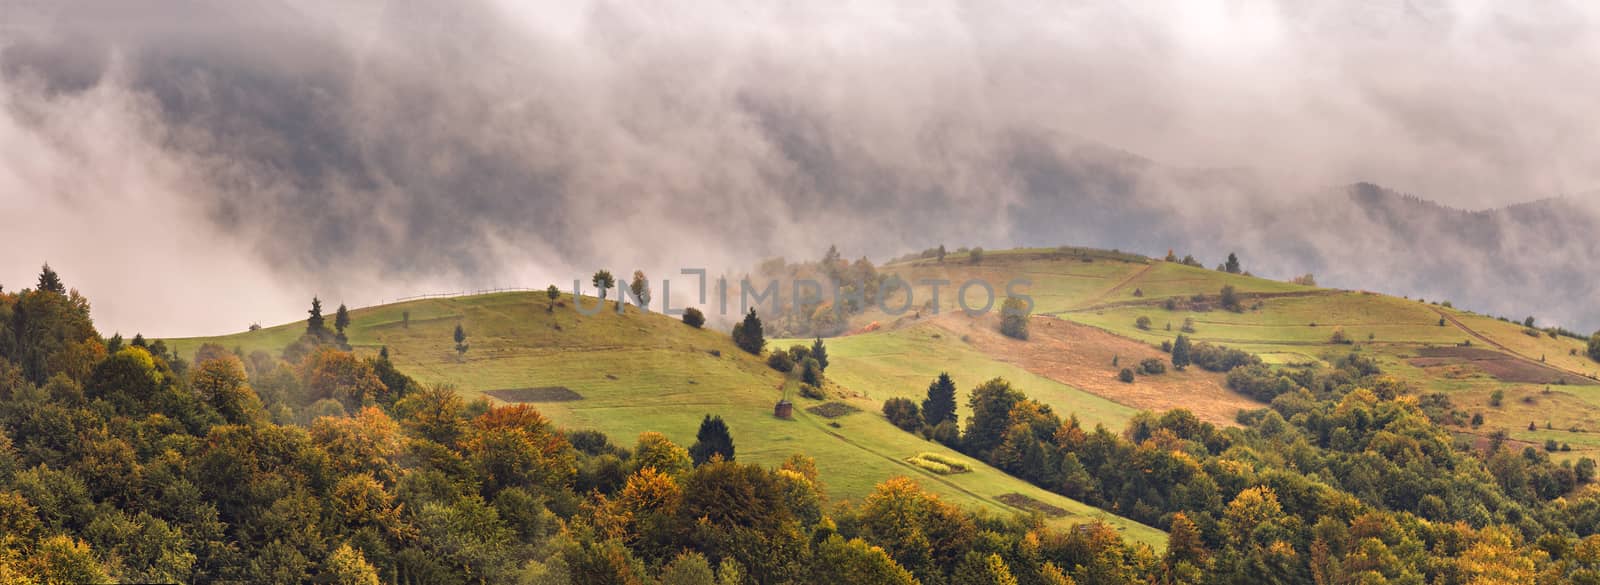 Autumn foggy mountain panorama. Fall rain and mist  by weise_maxim